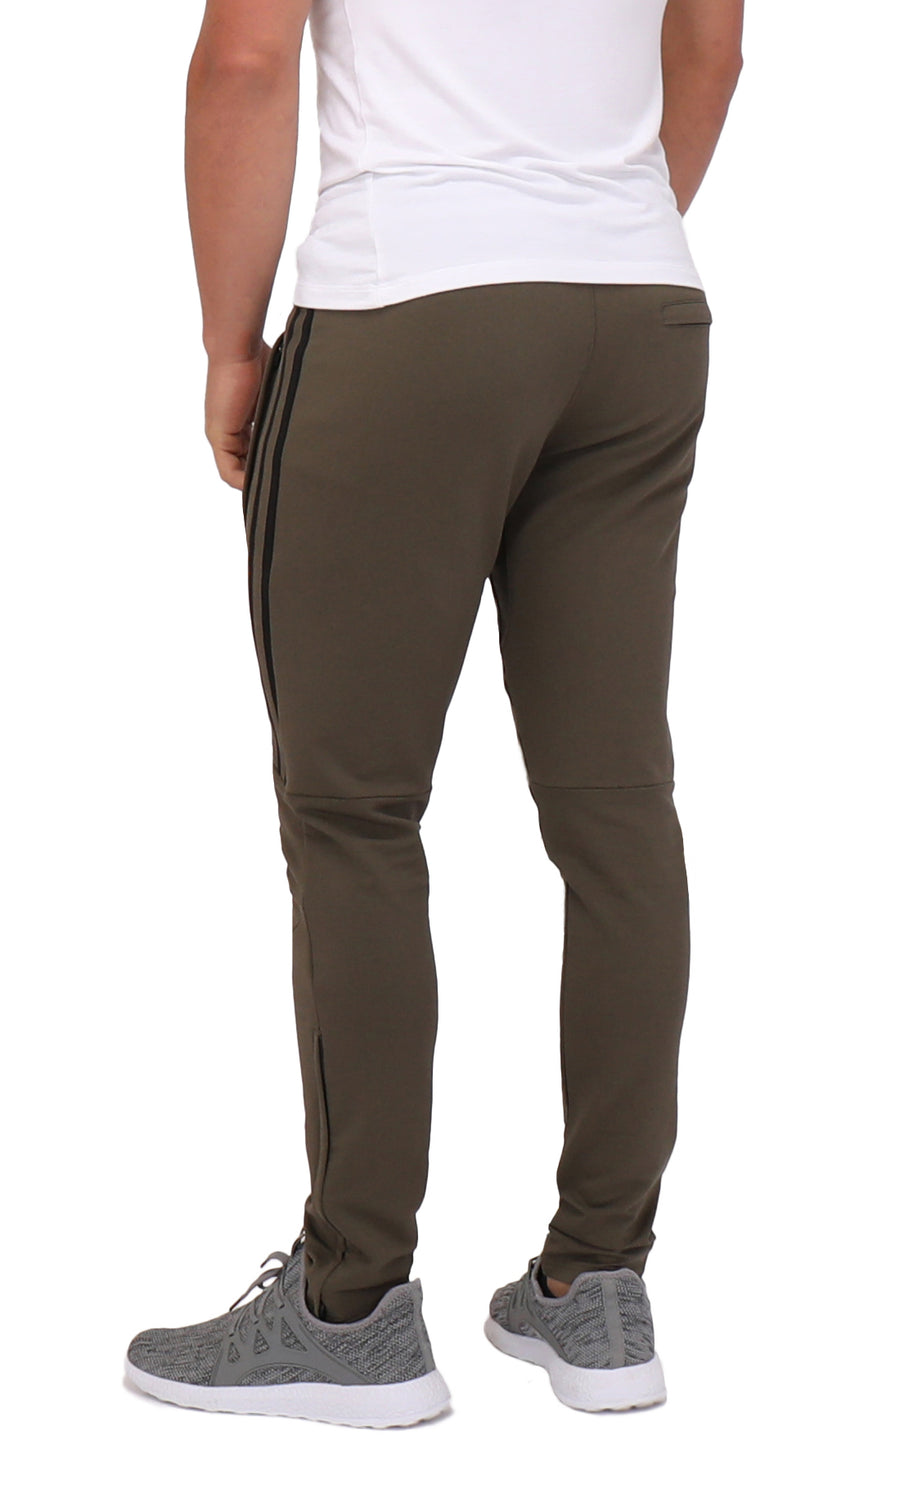 SCR SPORTSWEAR 33/36 Inseam Men's Striped Jogger Pants Cuffed Sweatpants  Training Workout Pants Slim Tall Long